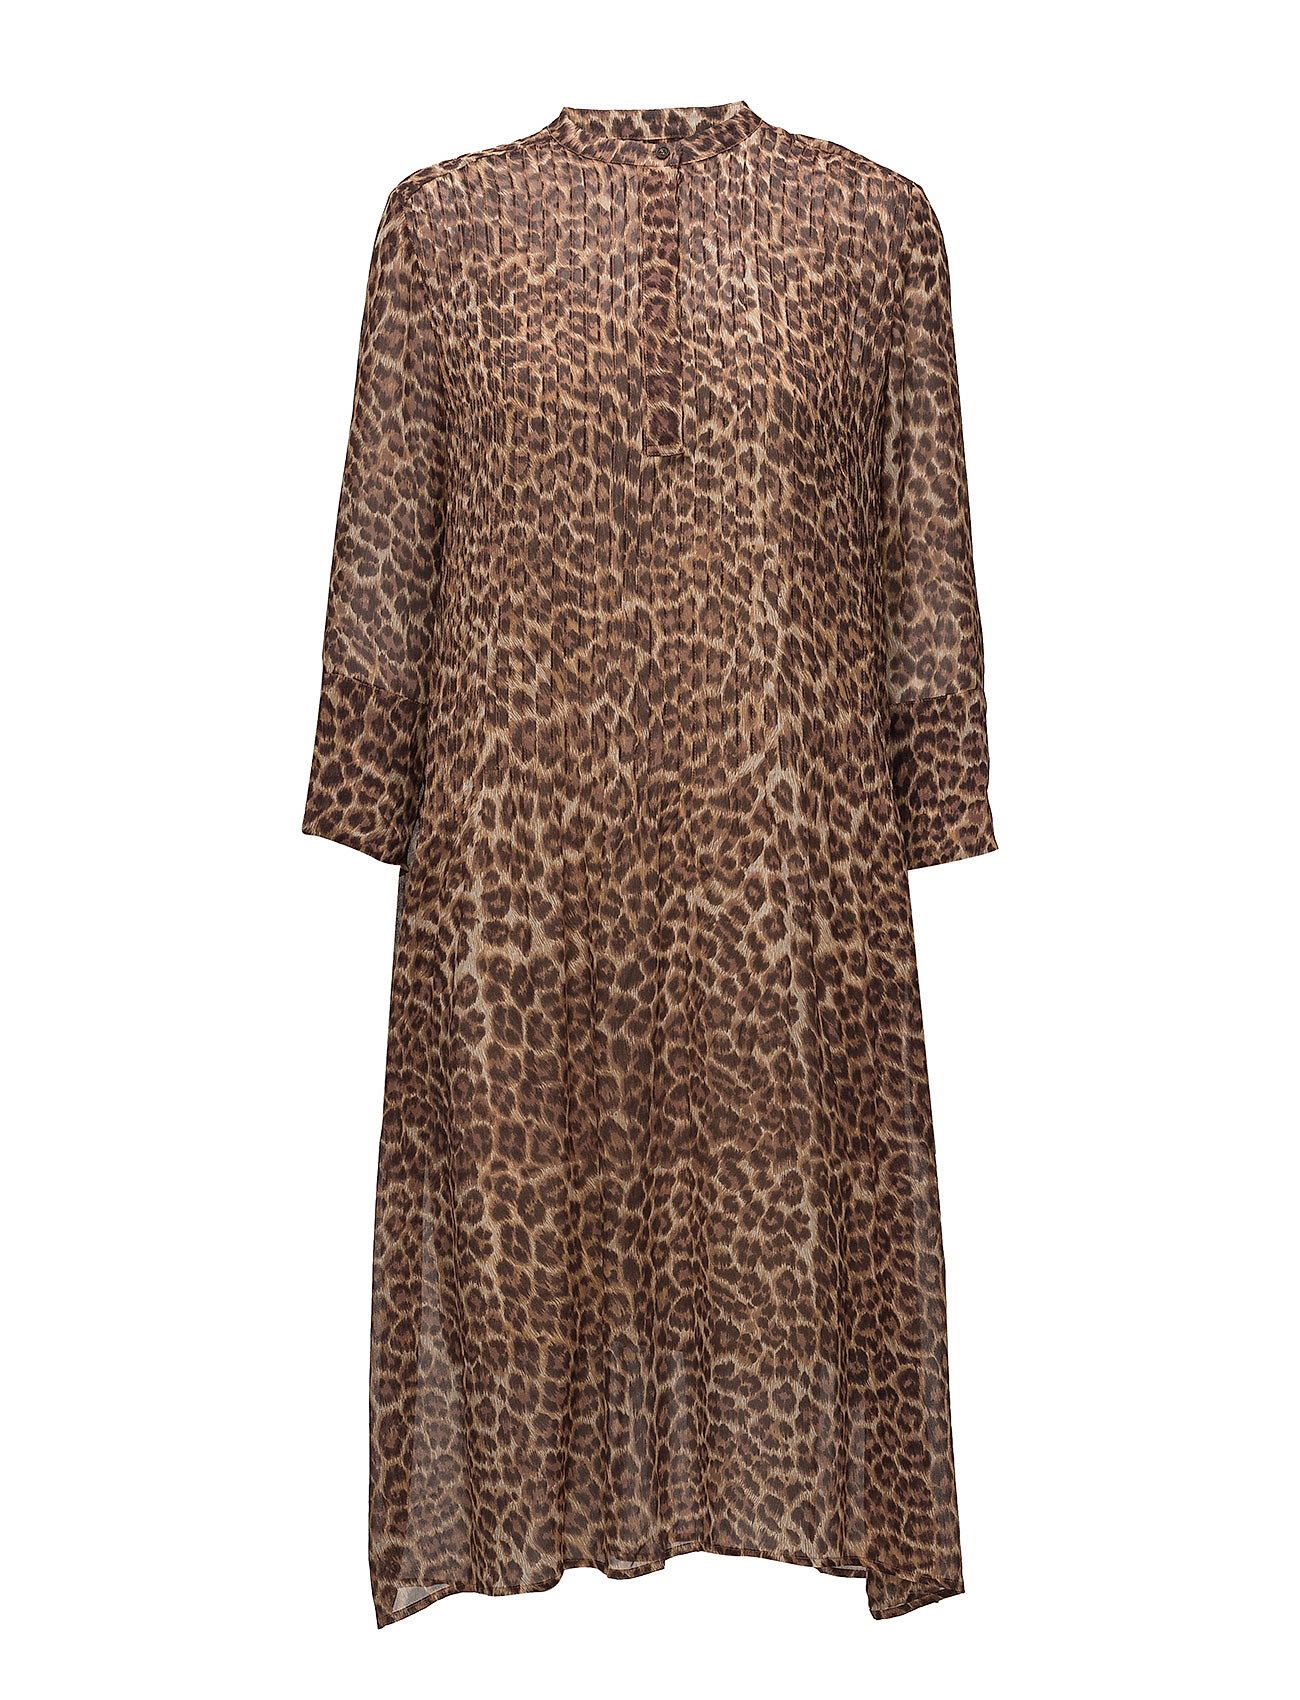 Elm Shirt Dress Aop 9695 (Leopard) (160.30 €) - Samsøe & Samsøe ...